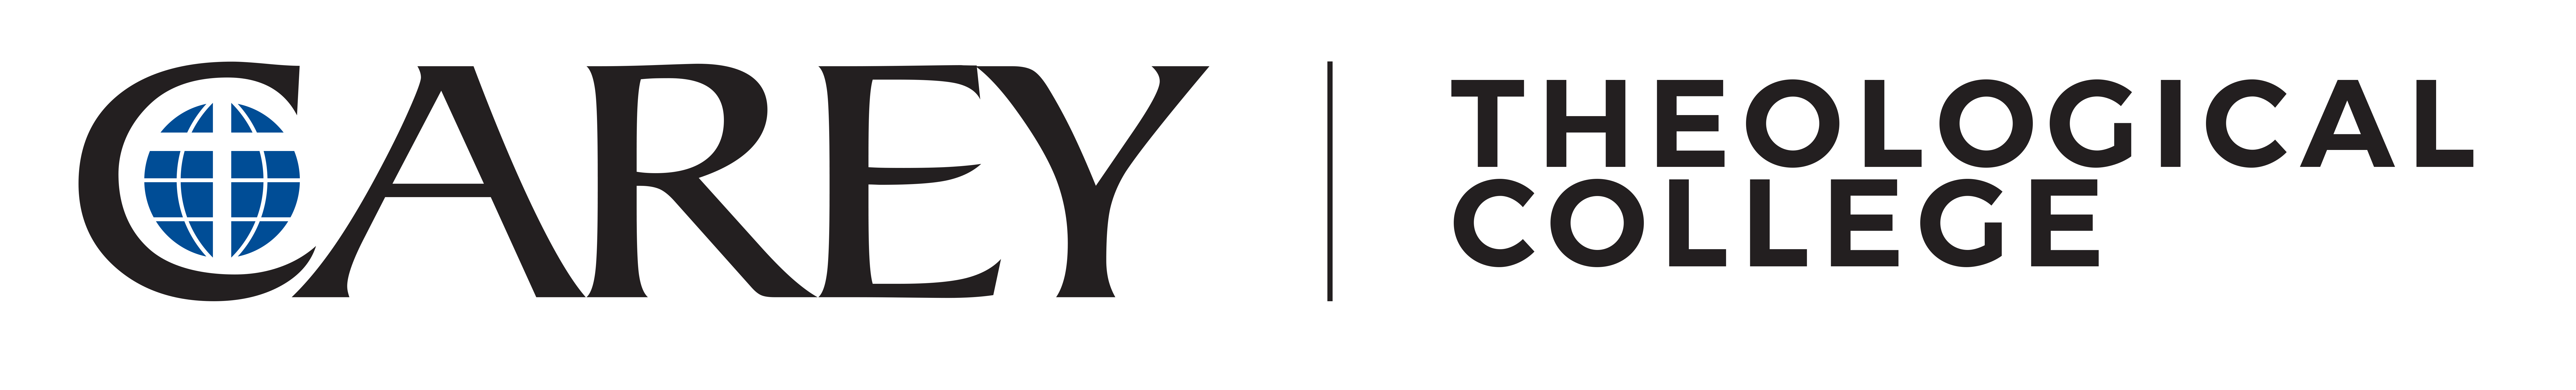 Carey Logo